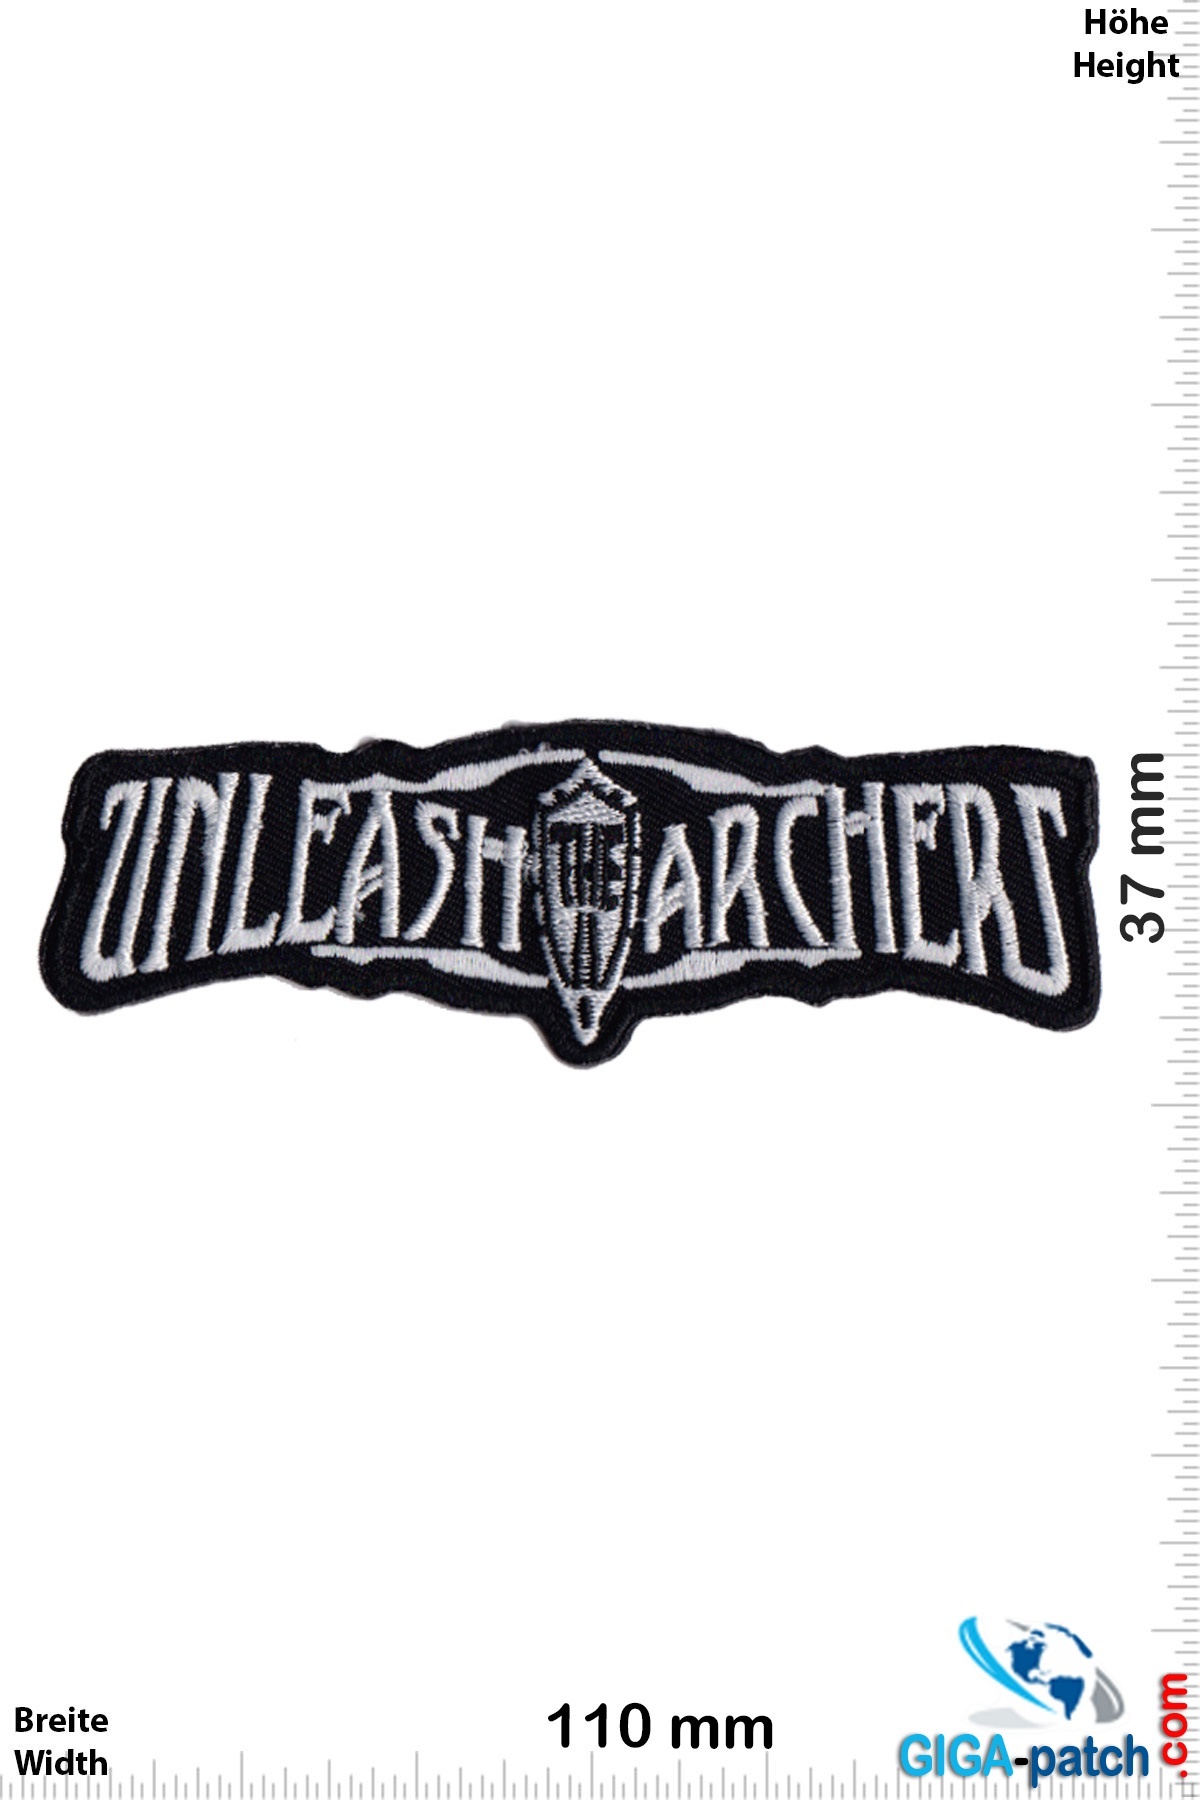 Unleash the Archers - Power-Metal-Band